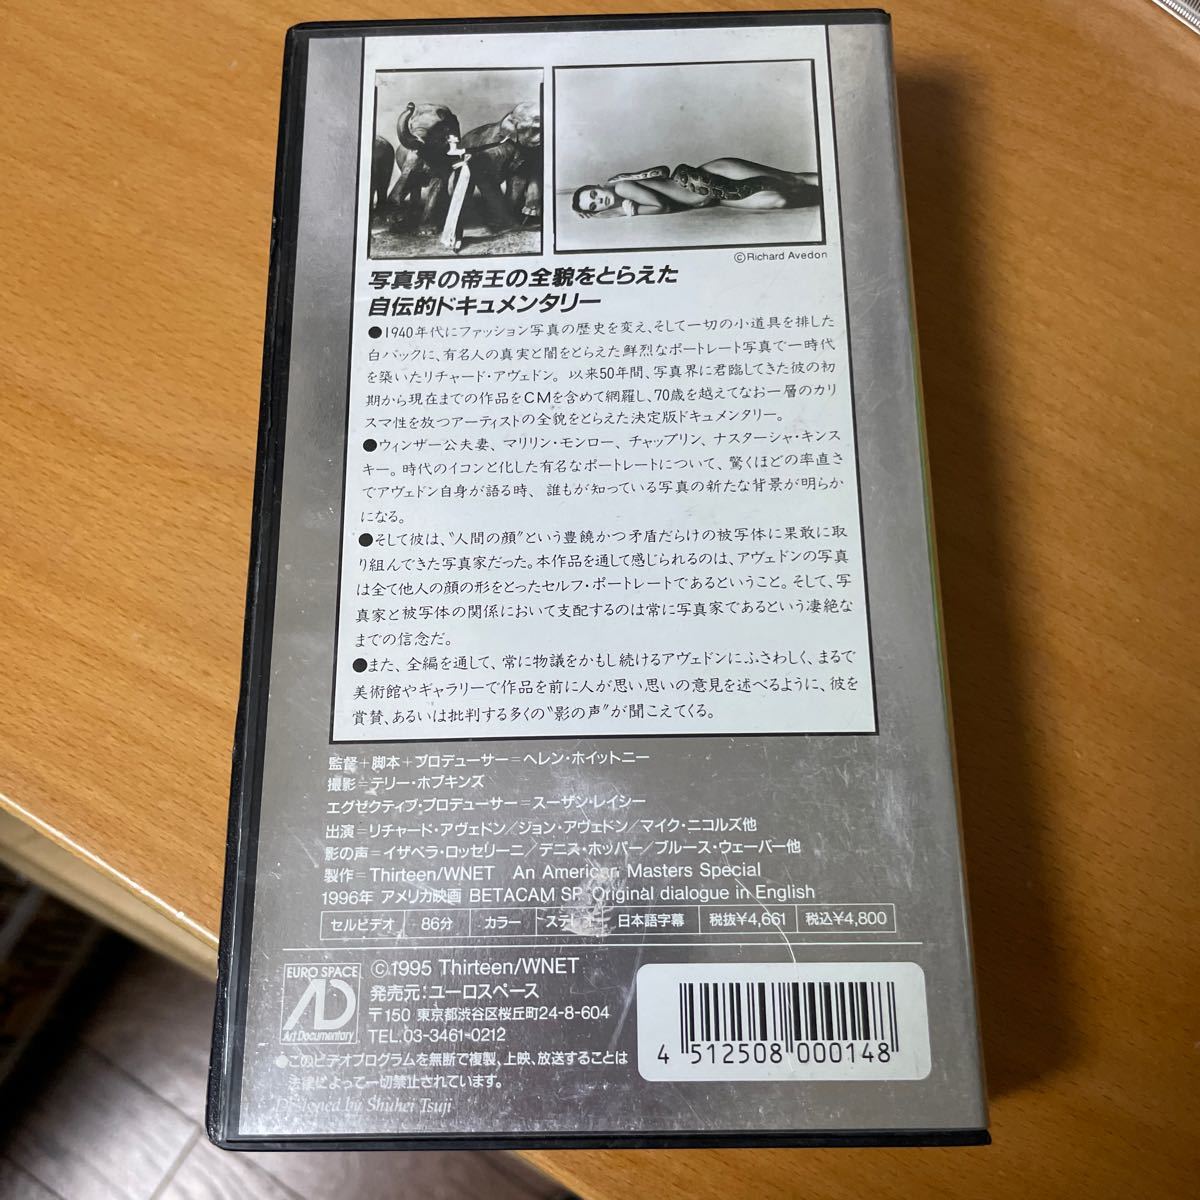 VHS) Richard ave Don .. свет Helen * ho i Tony Richard Avedon: Darkness and Laubs включение в покупку возможно *240214